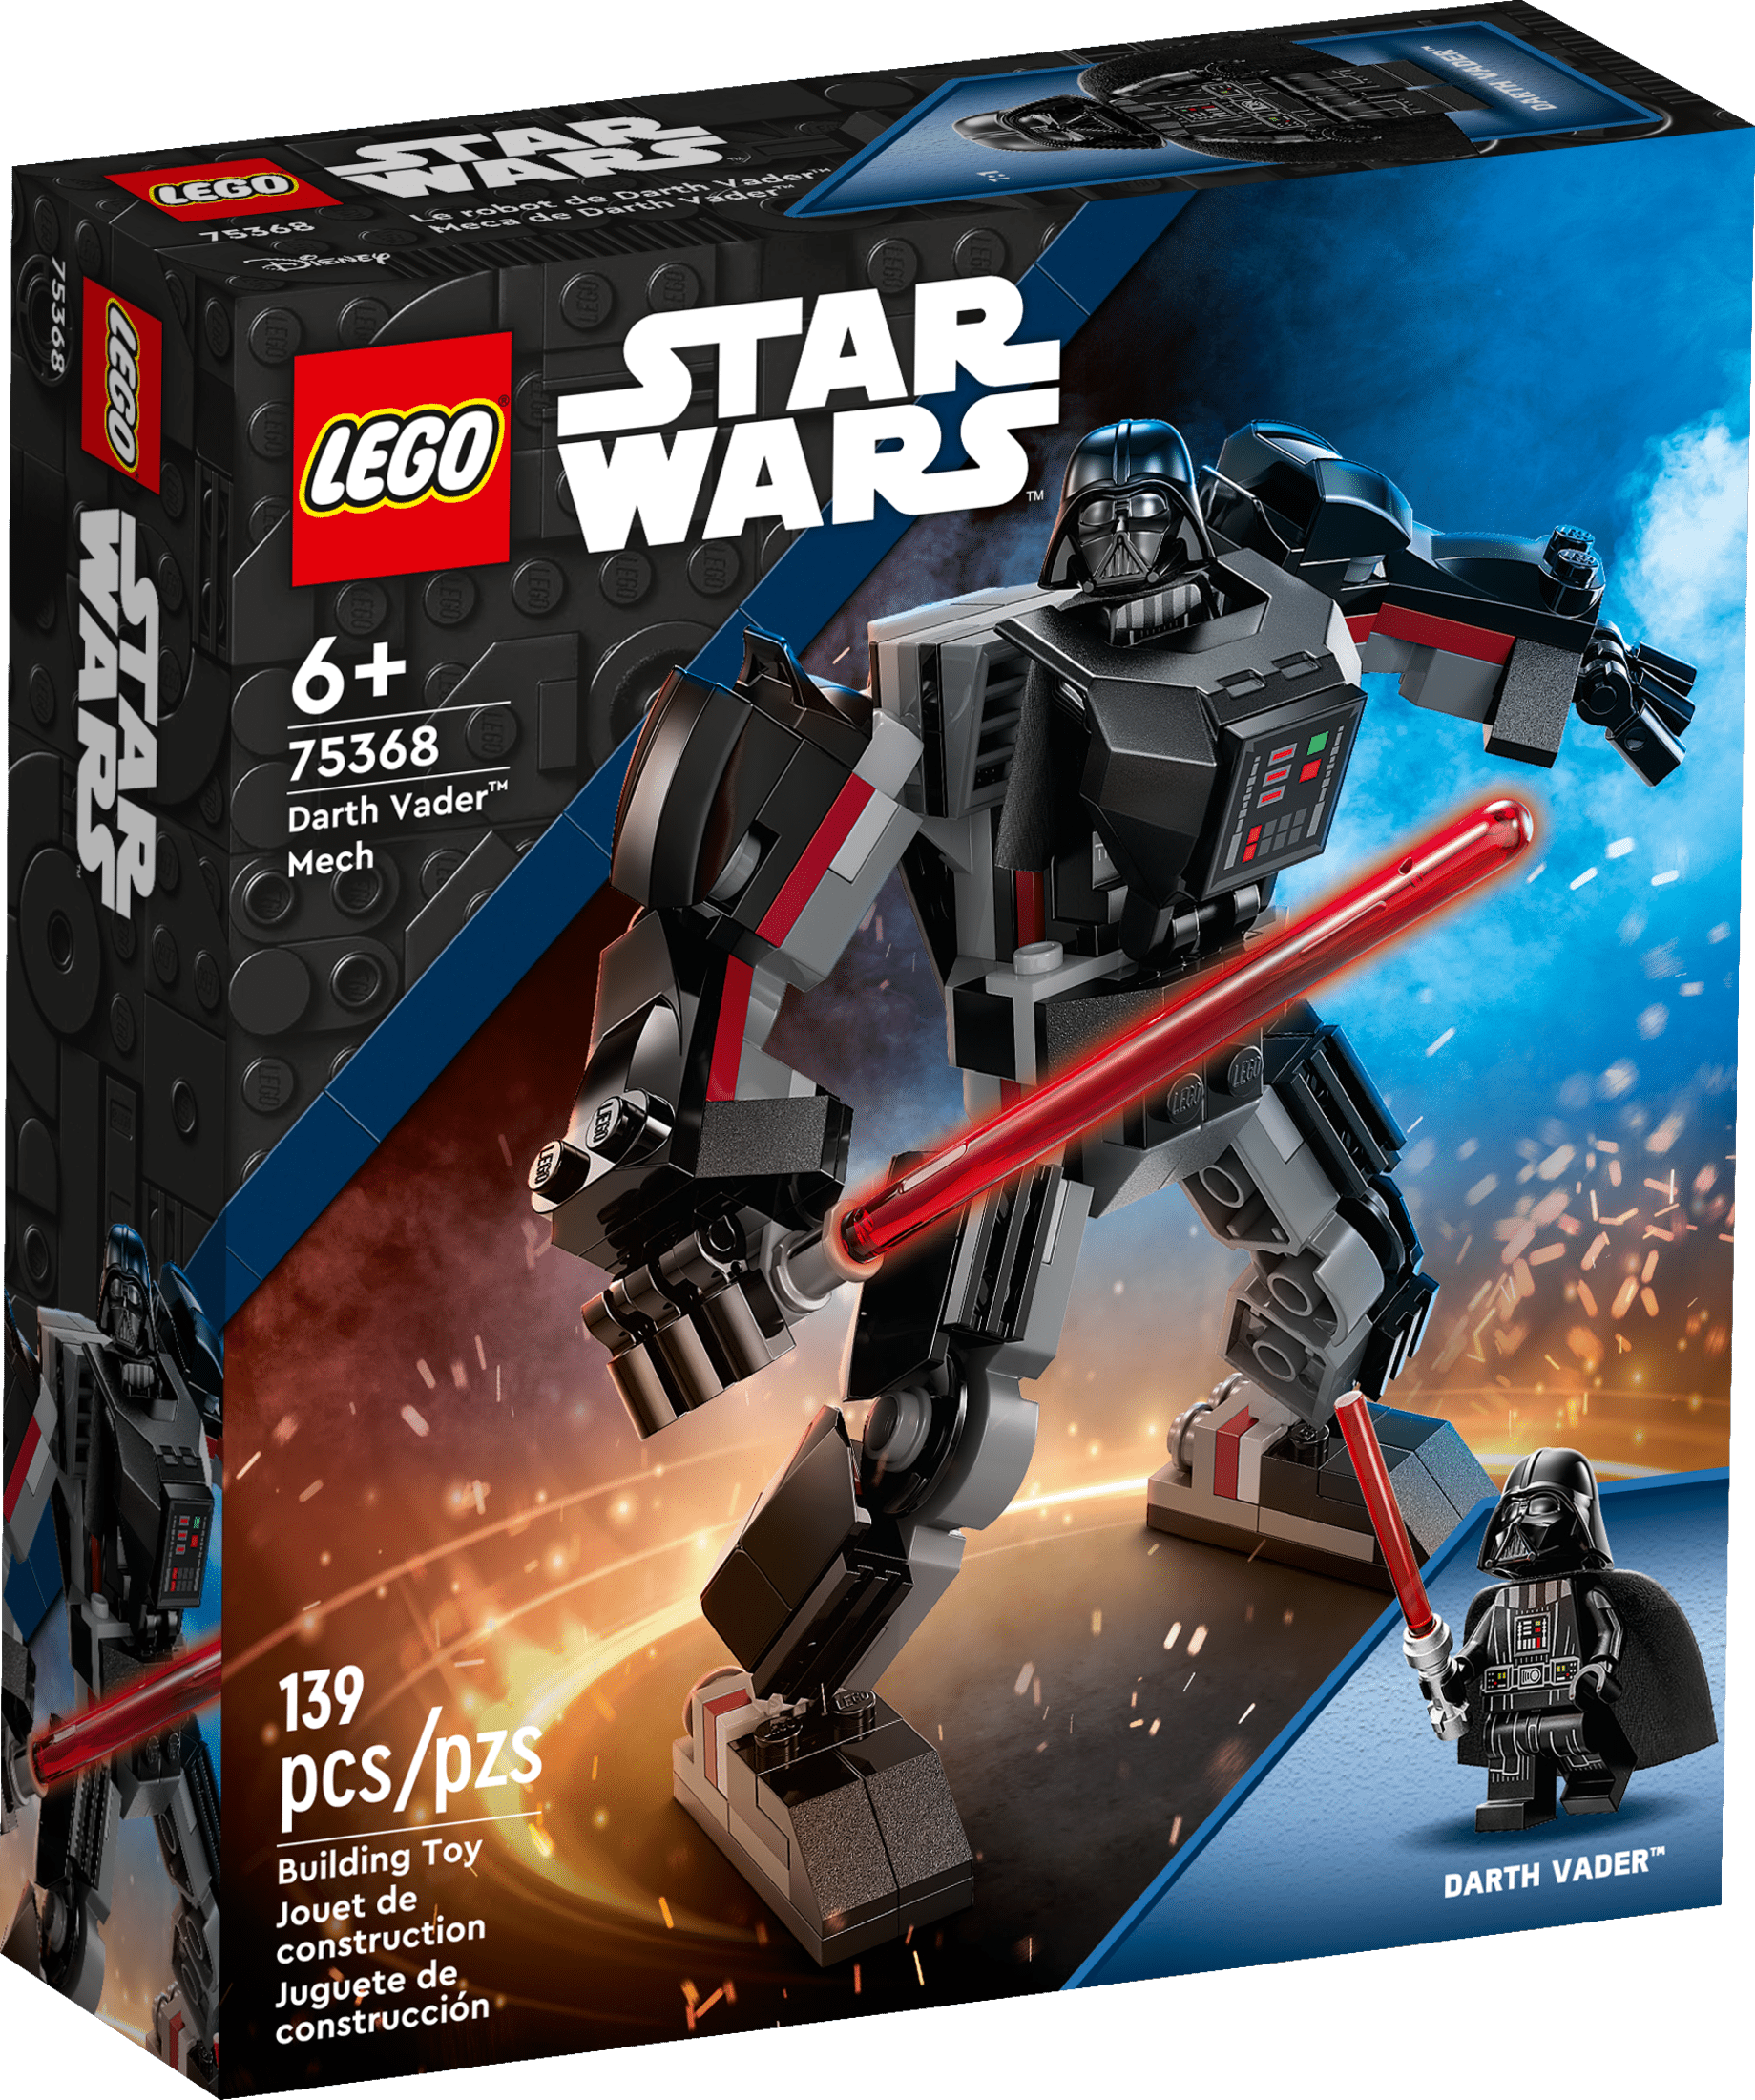 Lego BulbBotz Star Wars Darth Vader Kids Light-Up Digital Watch 2021098  5060407851228 - Watches, Bulbbotz Star Wars - Jomashop